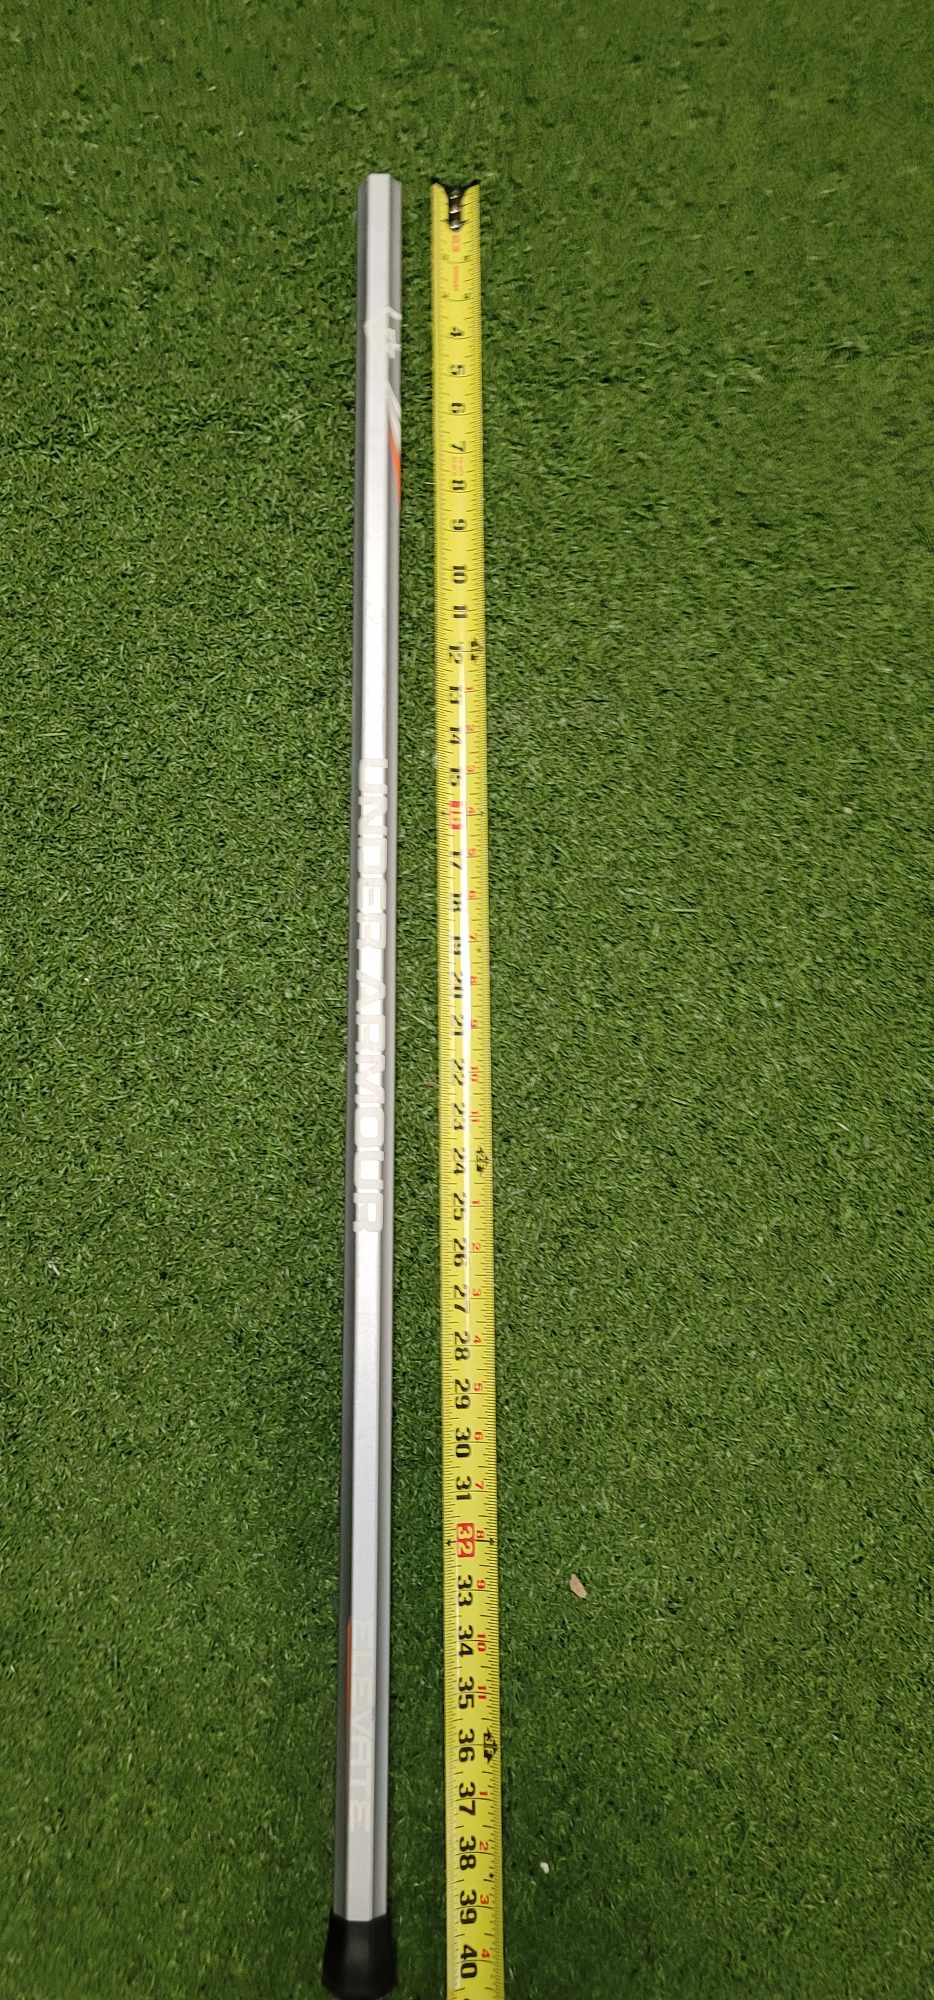 Lacrosse Stick - Elevate 7000 Titanium + Scalloped Profile 